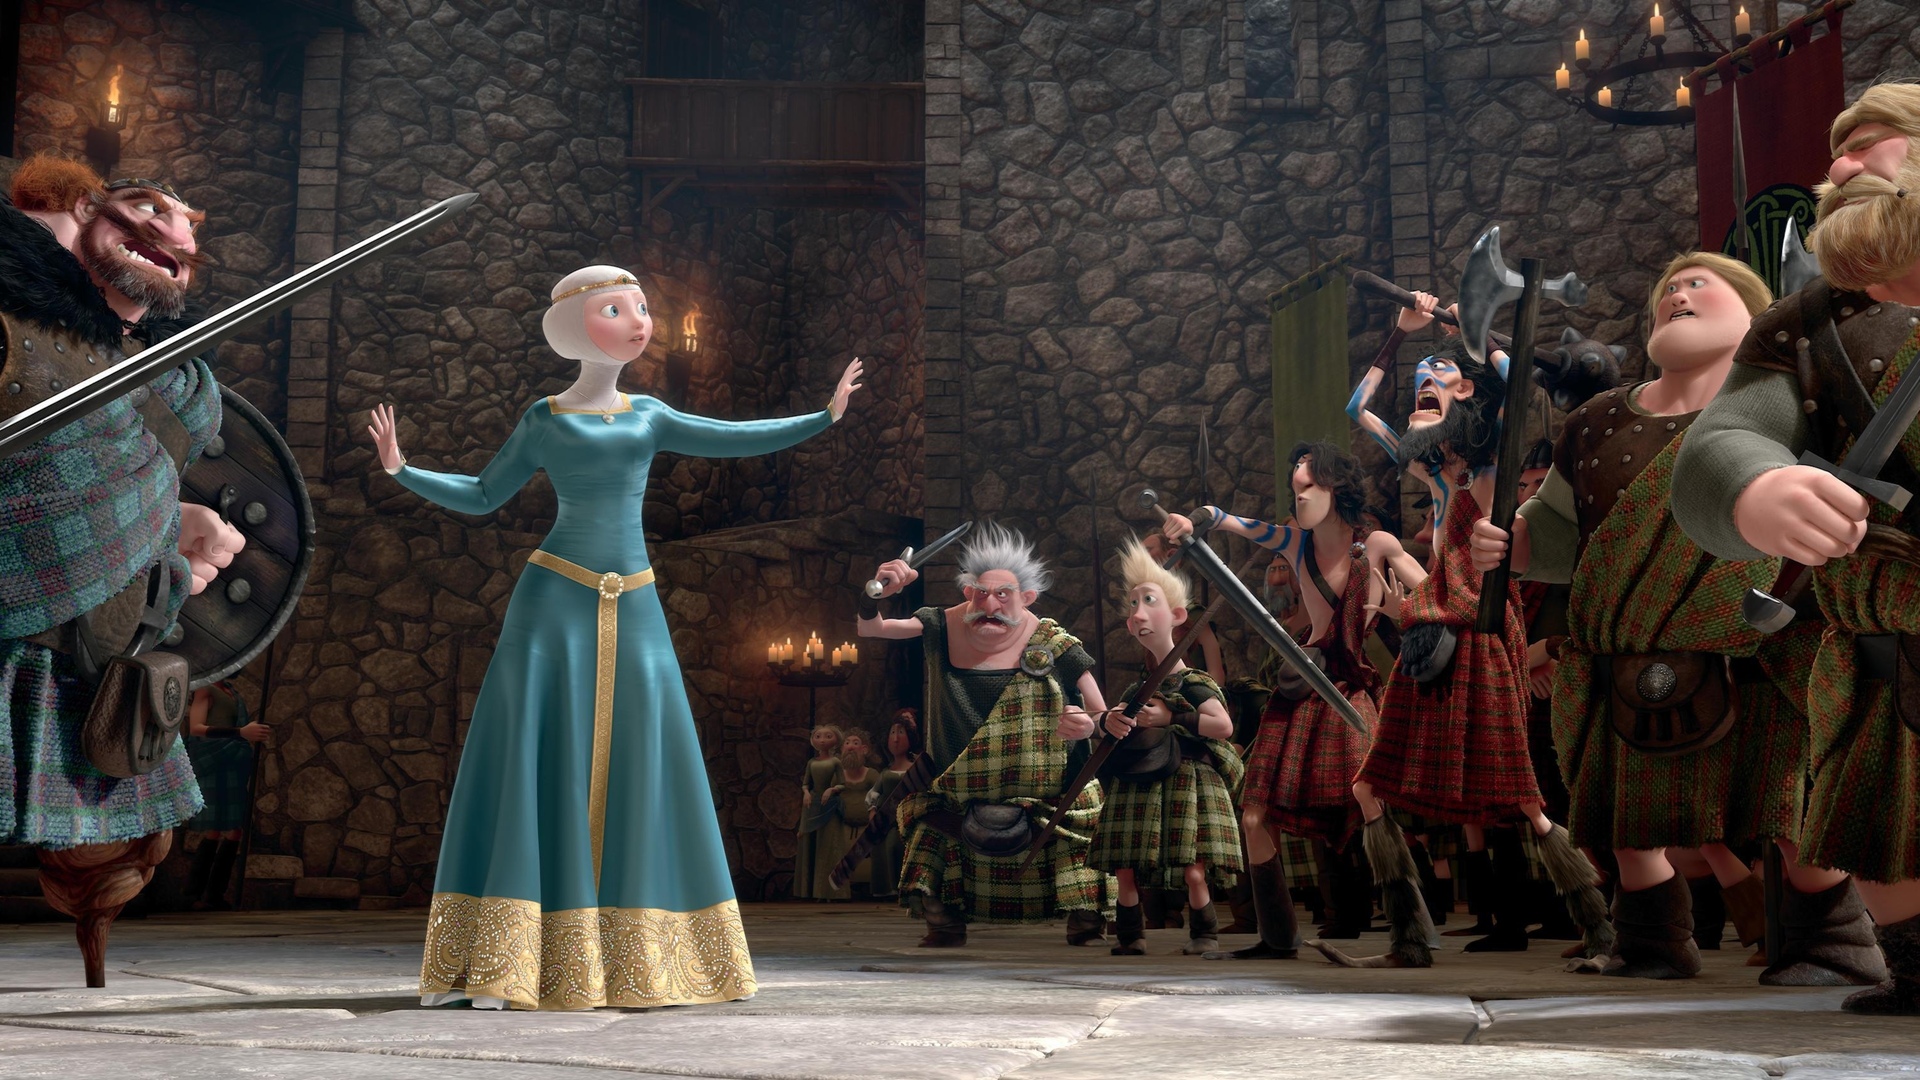 princess, Film, Queen, Scotland, Red, Hair, Pixar, Merida, Brave, The, Movie, Disney, King, Warriors Wallpaper